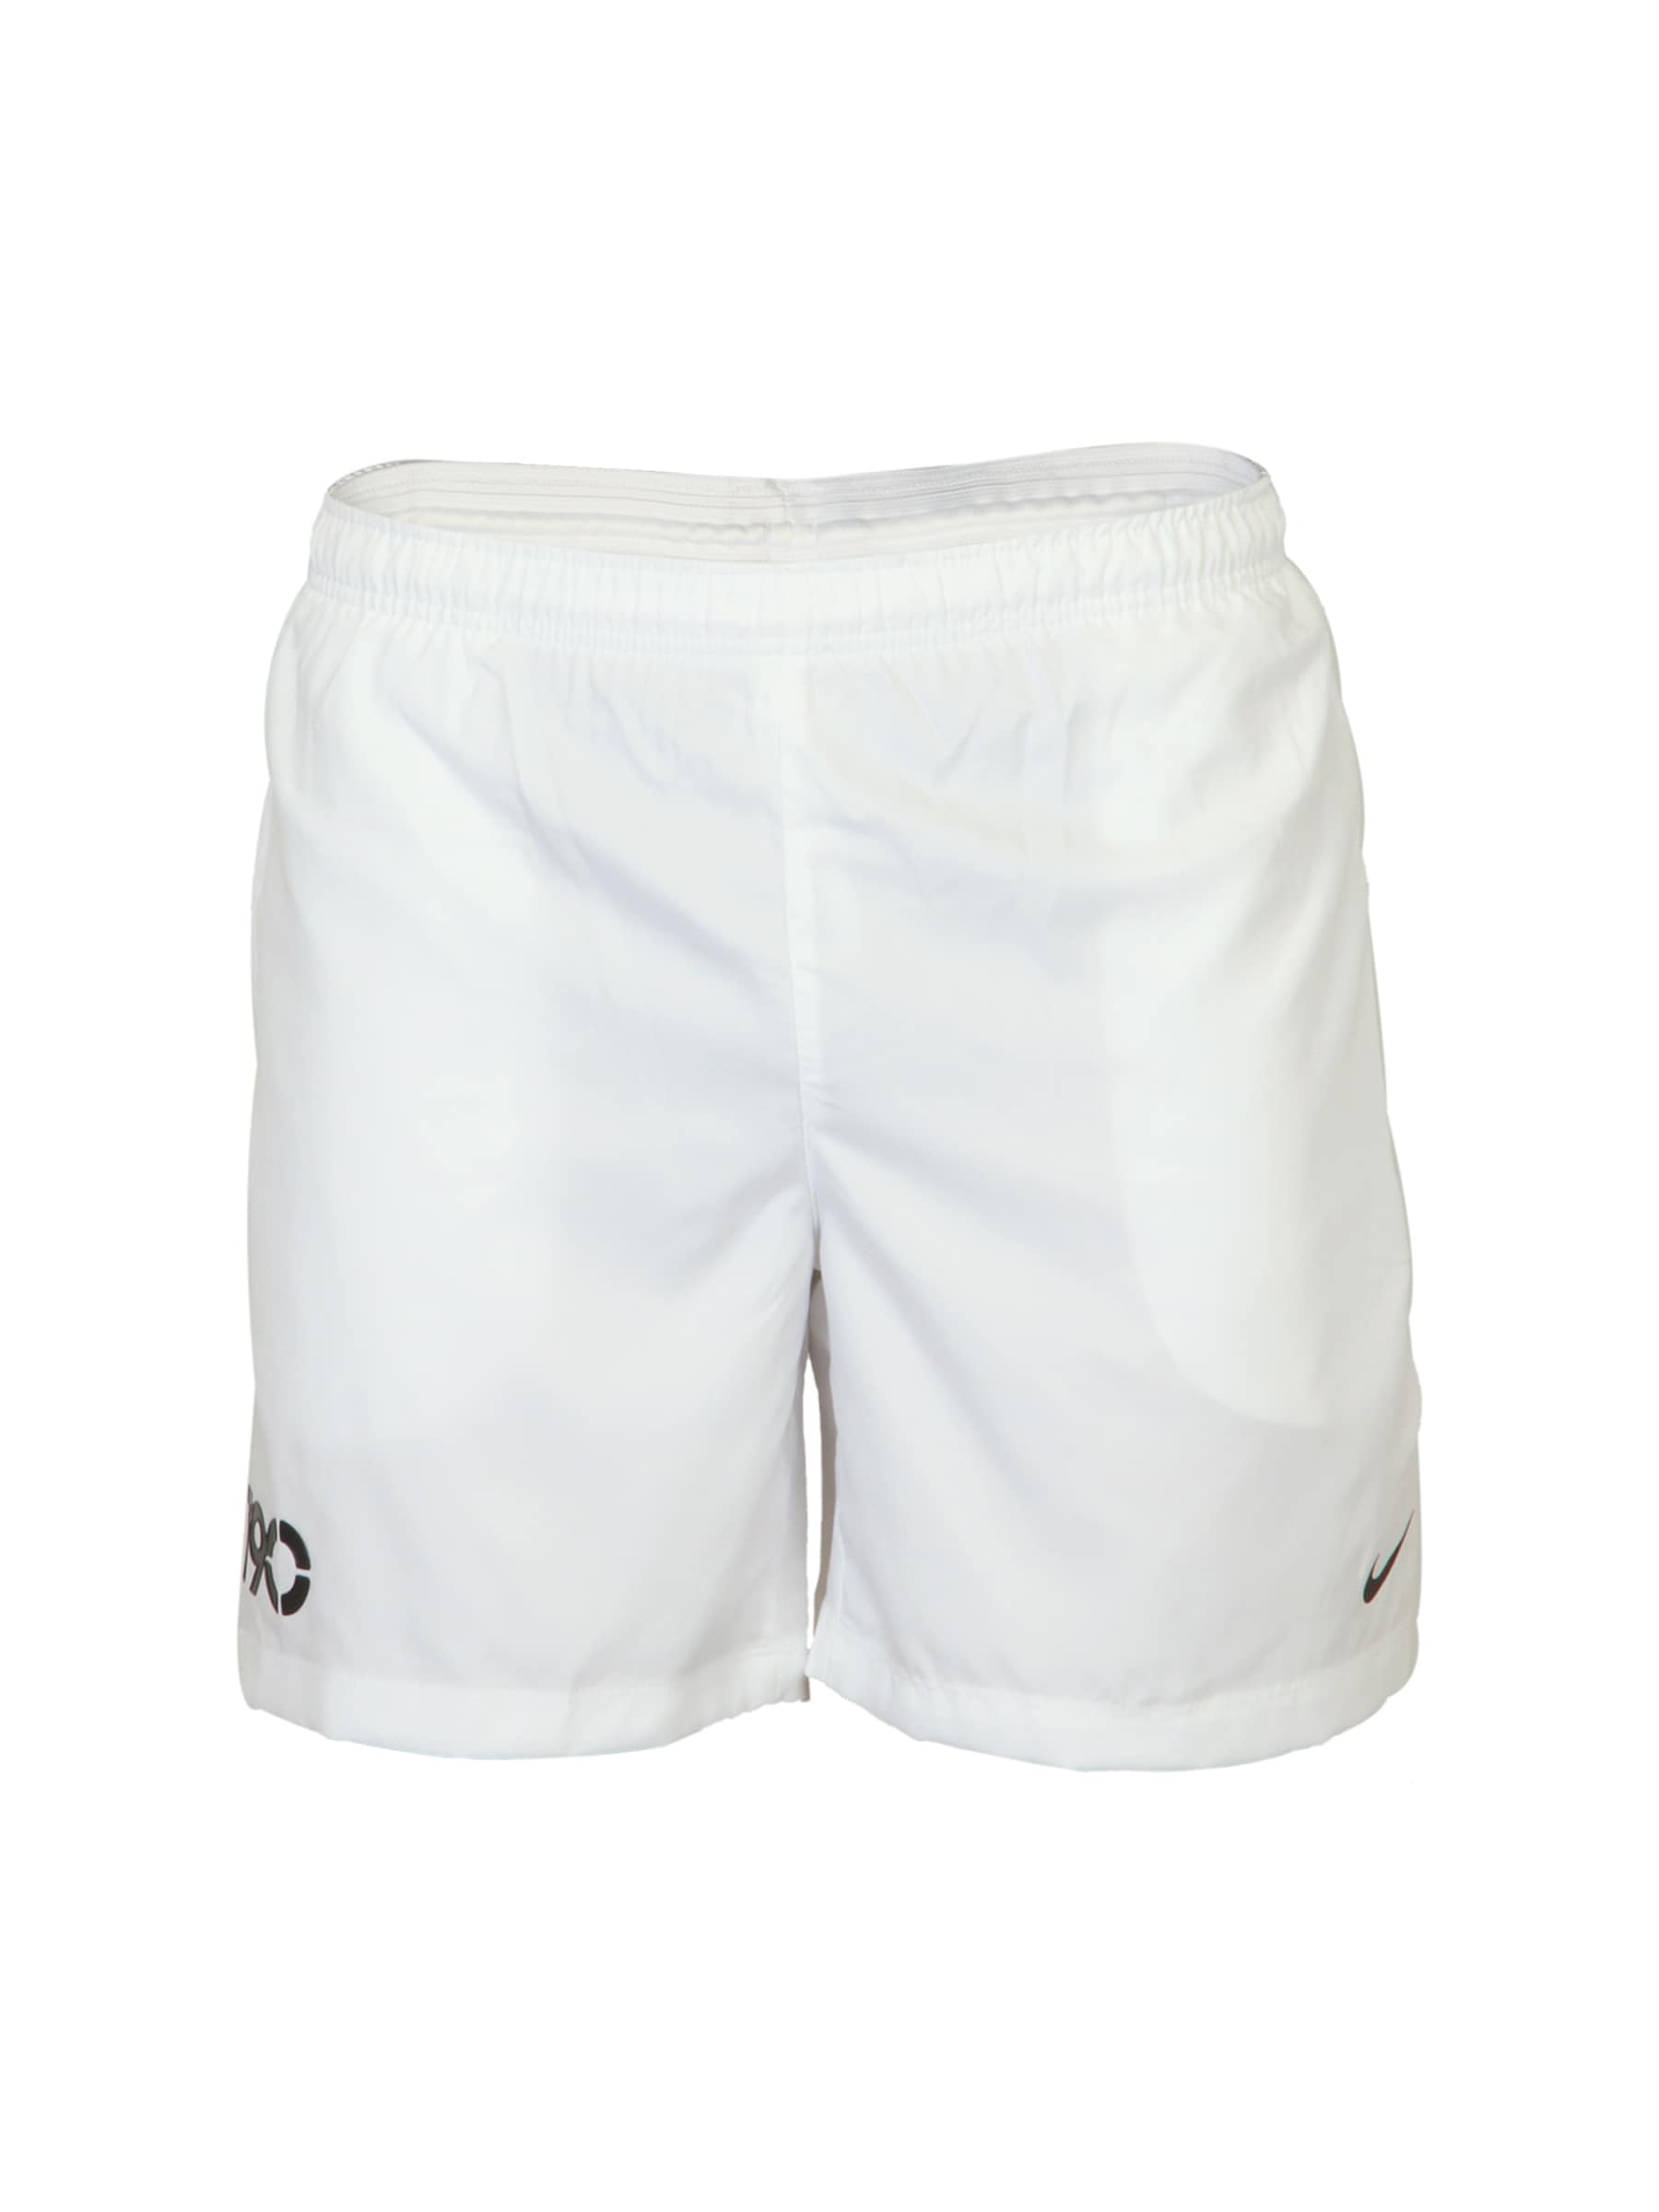 Nike Men Woven White Shorts